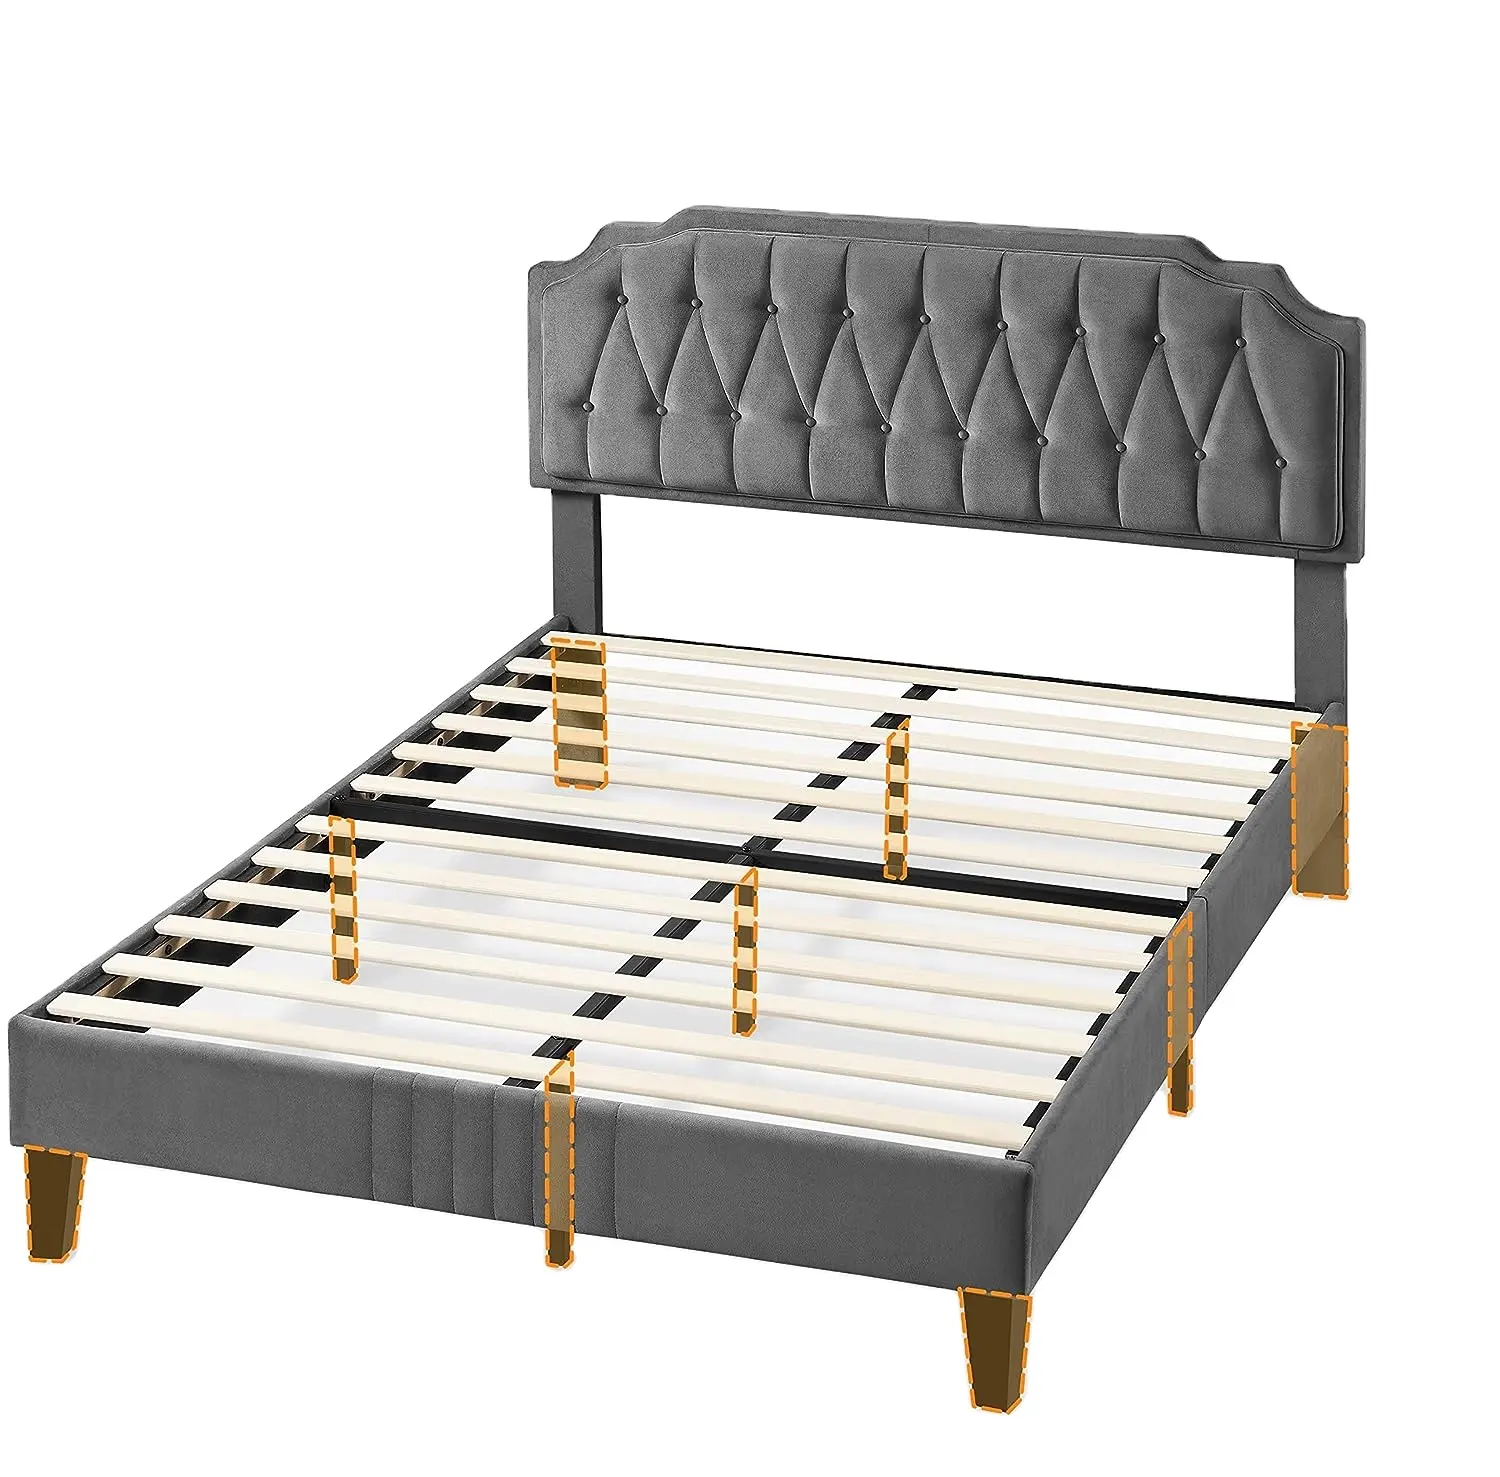 2023 new model Queen Size Bed Frame, Velvet Upholstered Platform Bed with Curved Headboard